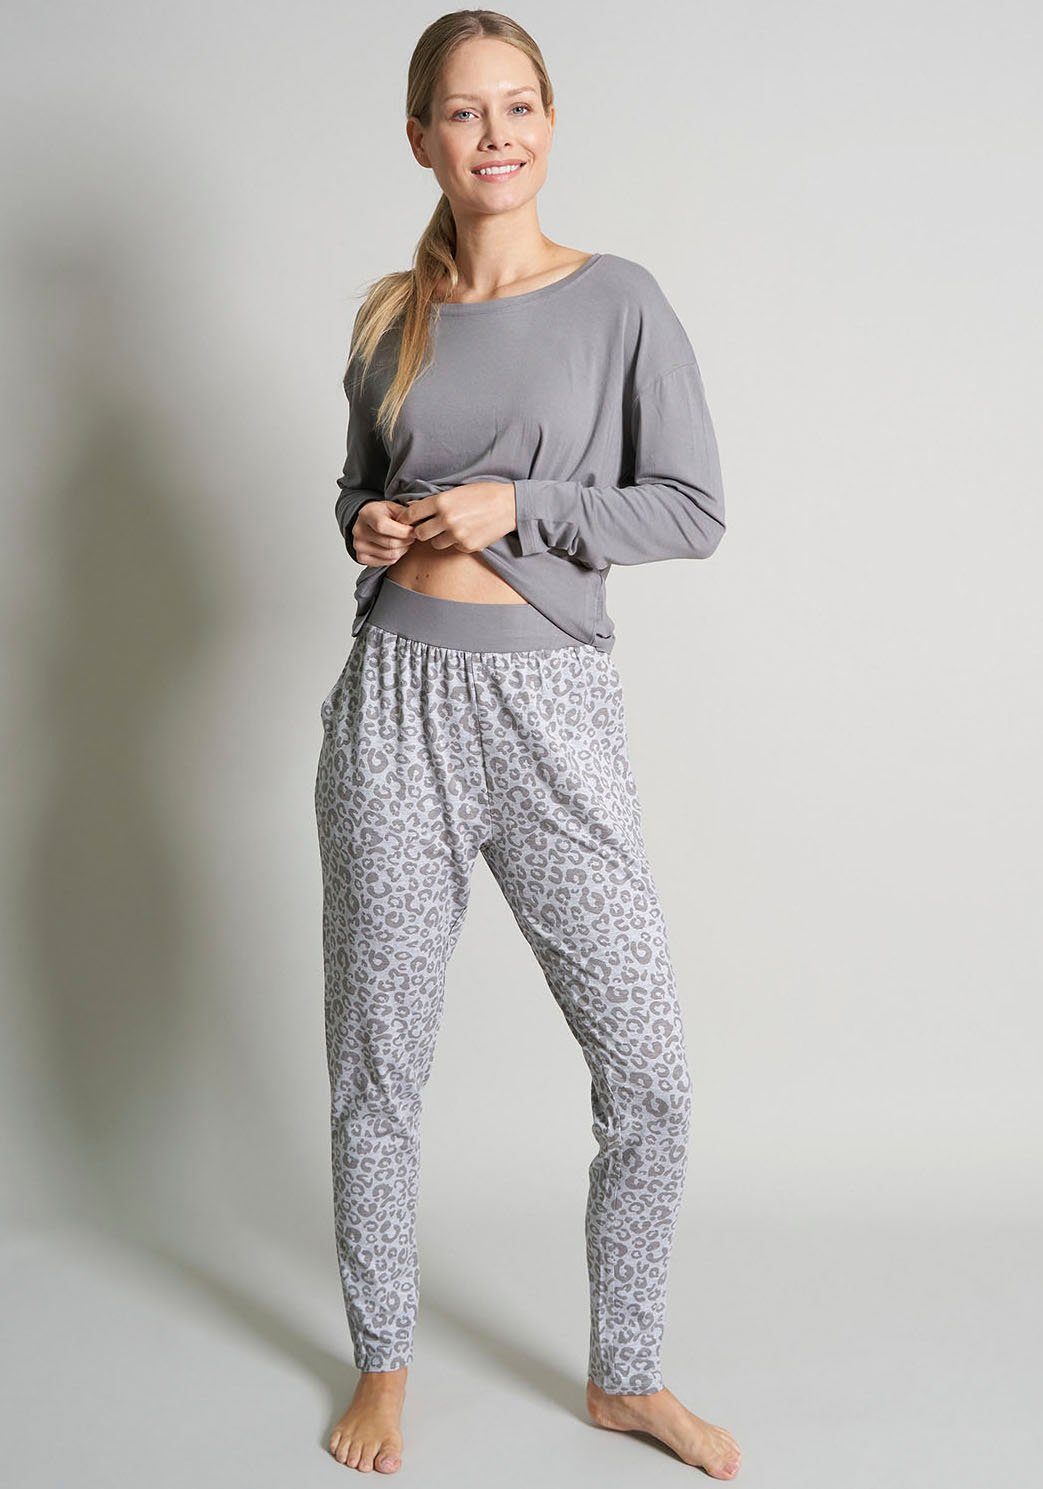 TOM TAILOR Hose, Pyjamahose lang Pyjama Tailor Tom Leo-Print, von mit Schlafhose